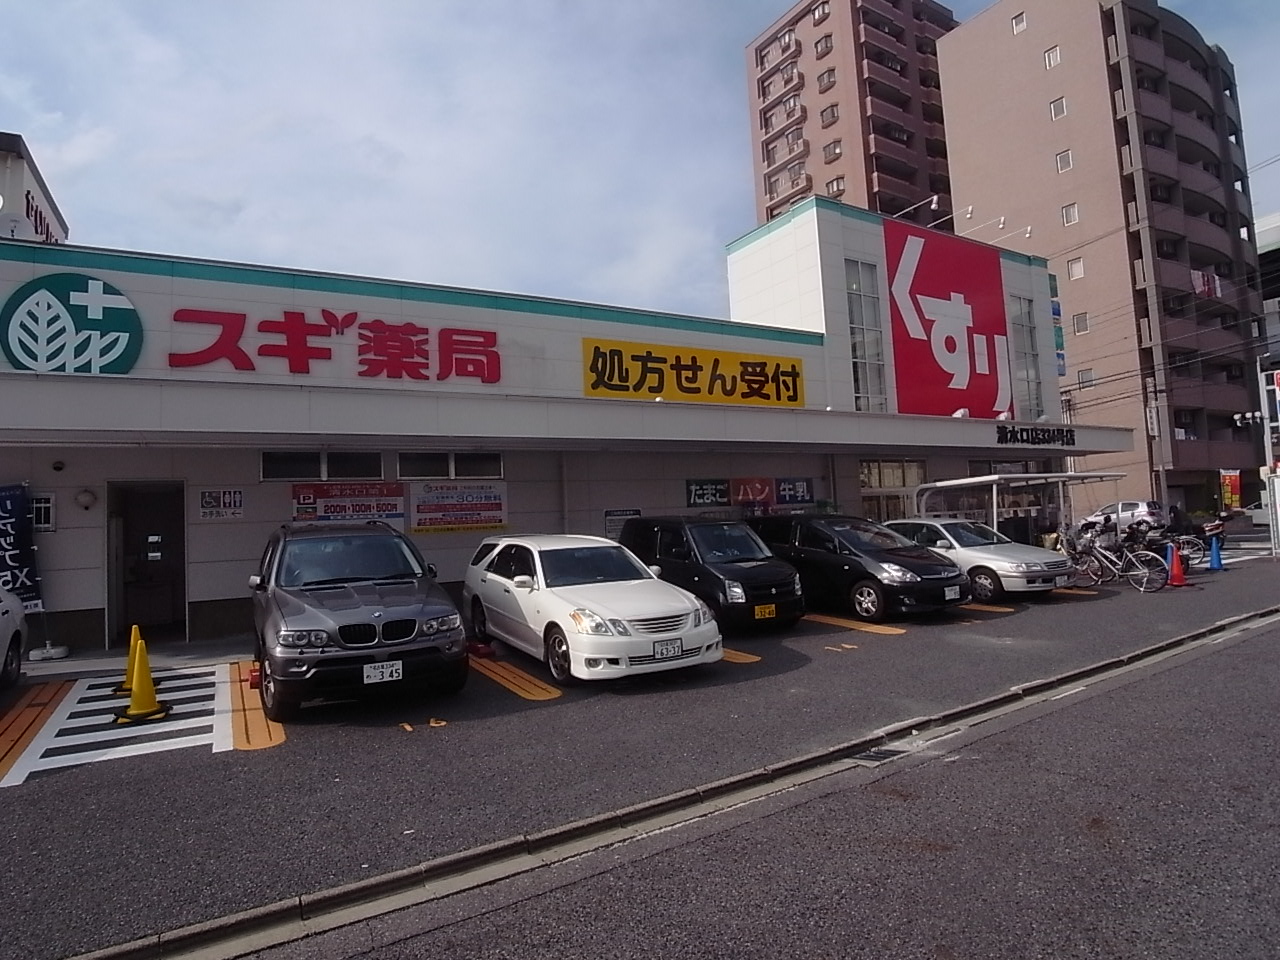 Dorakkusutoa. Cedar pharmacy Shimizuguchi shop 734m until (drugstore)